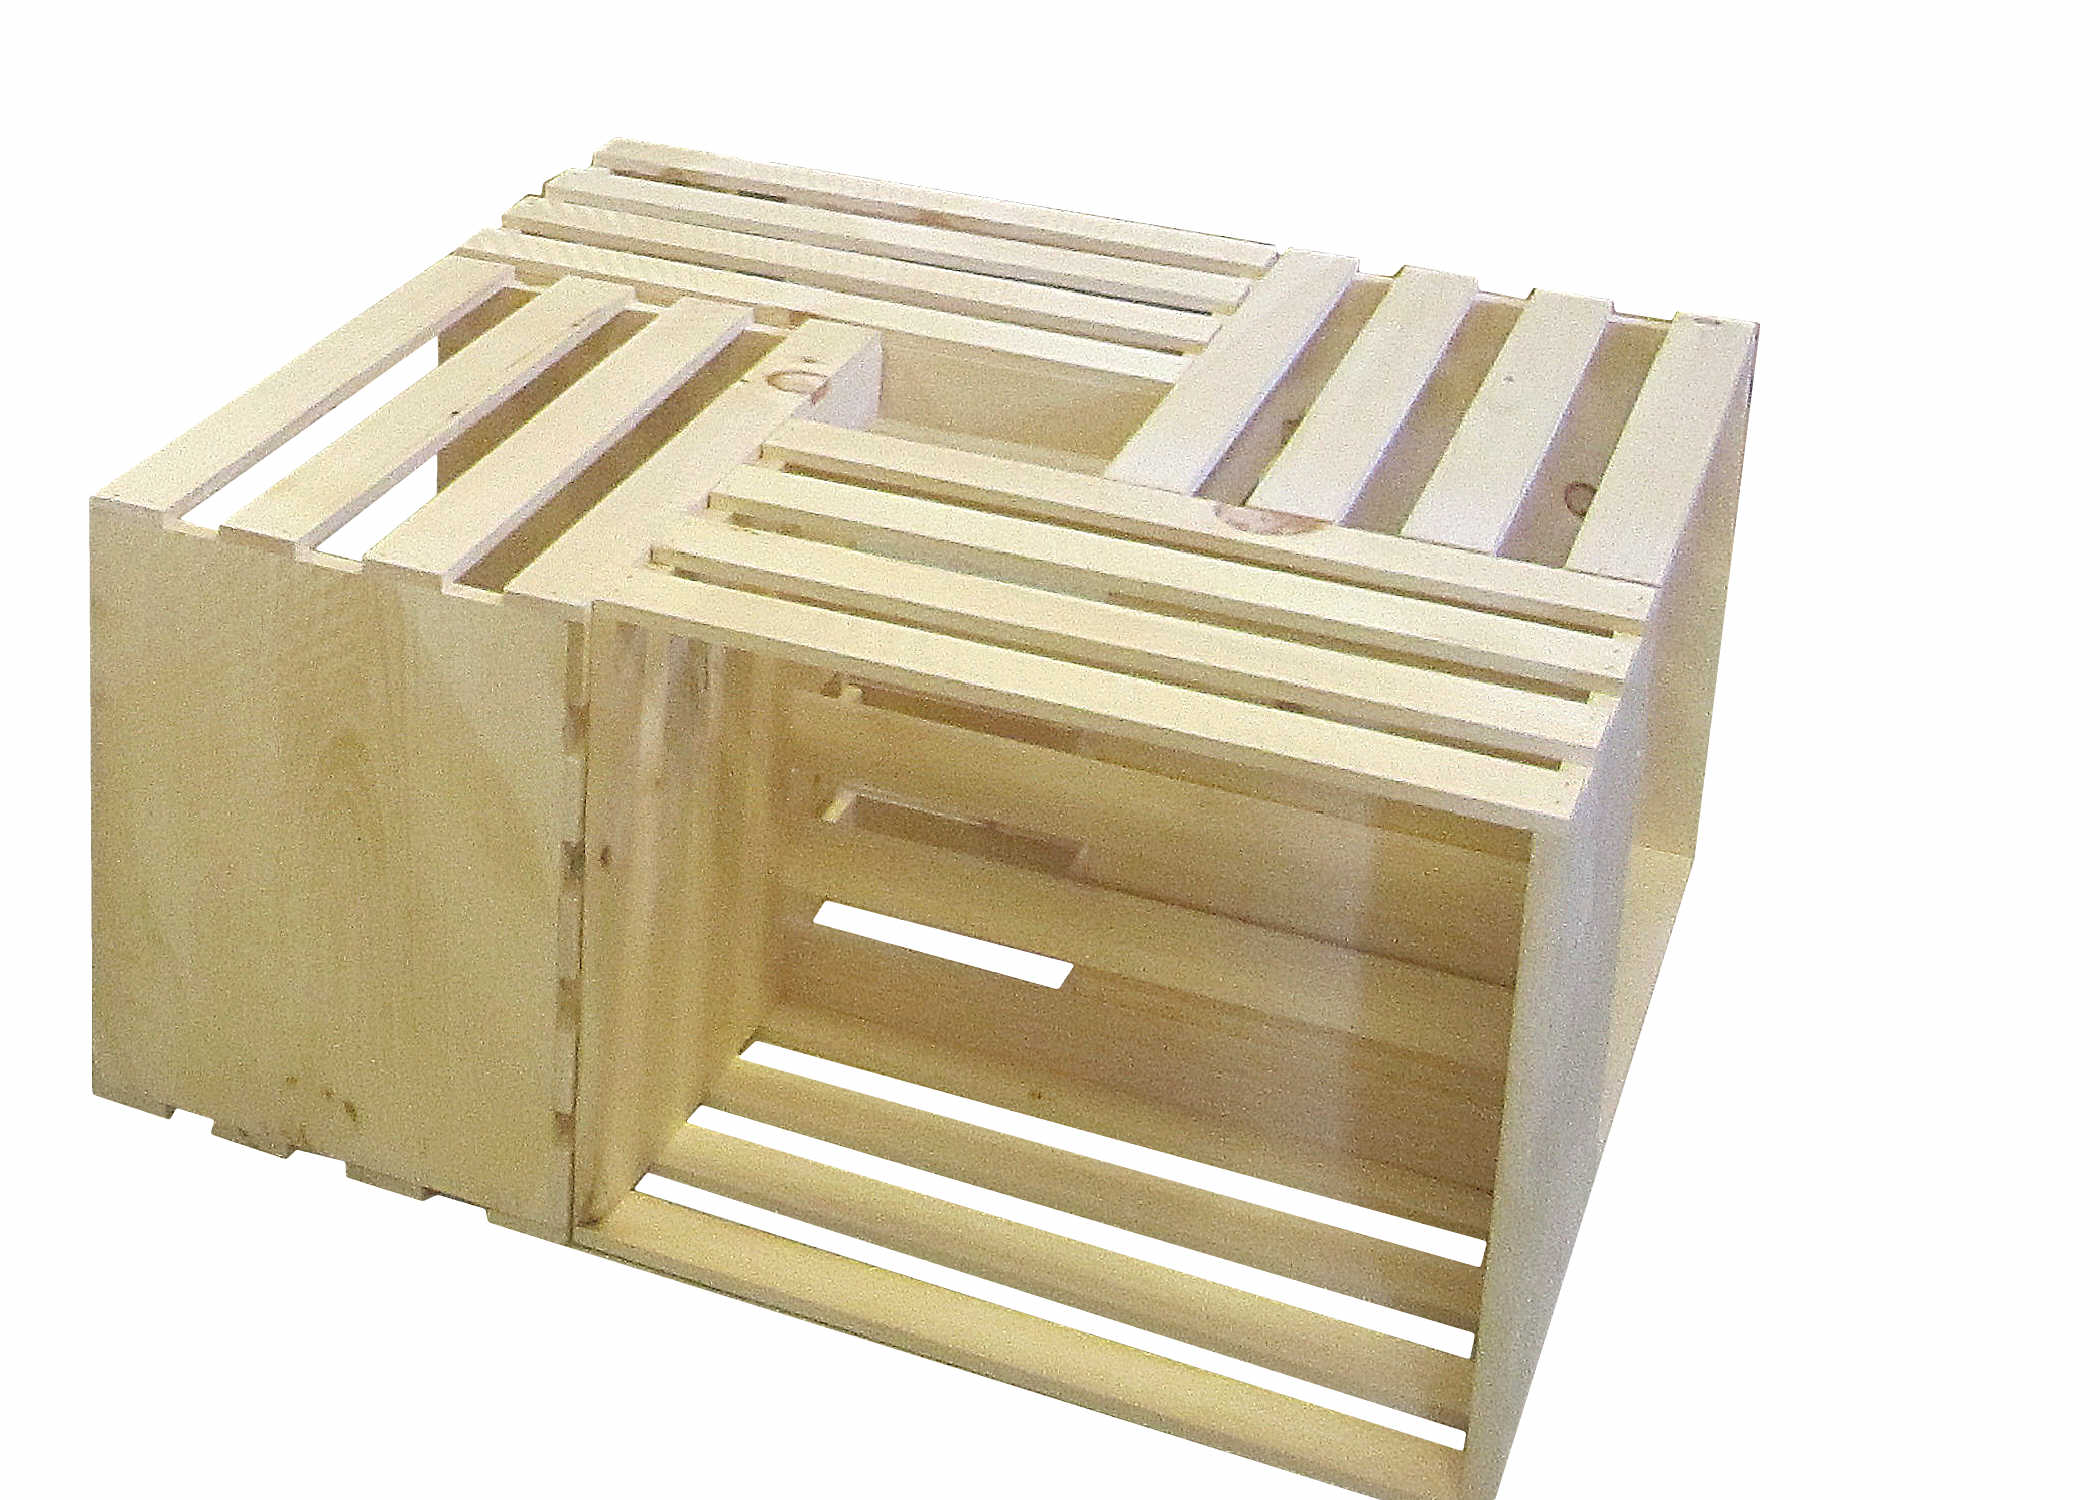 custon wooden crate  .jpg